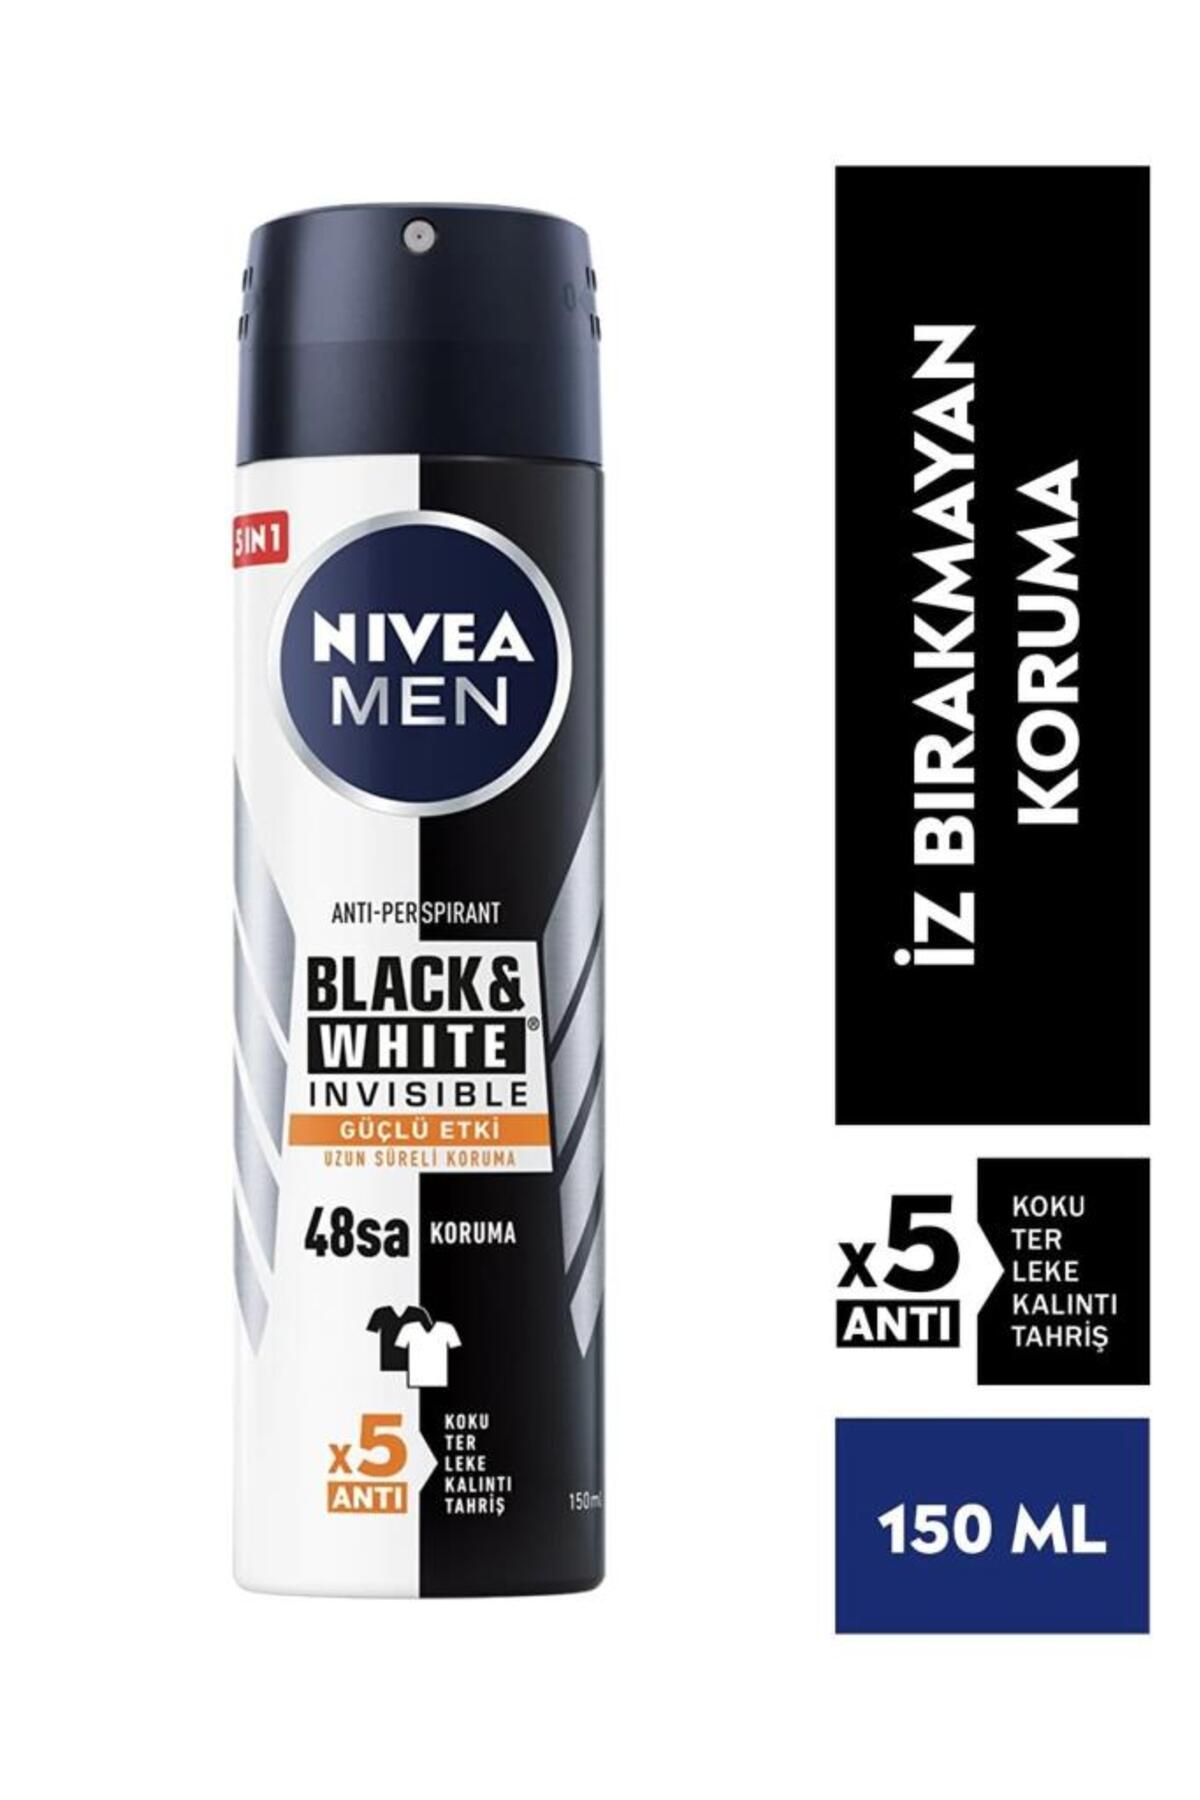 NIVEA ضدعرق اسپری مردانه مخصوص ضد لکه سفید و سیاه با تاثیر قوی 150 میلی لیتر 48 ساعت محافظت ضد تعریق